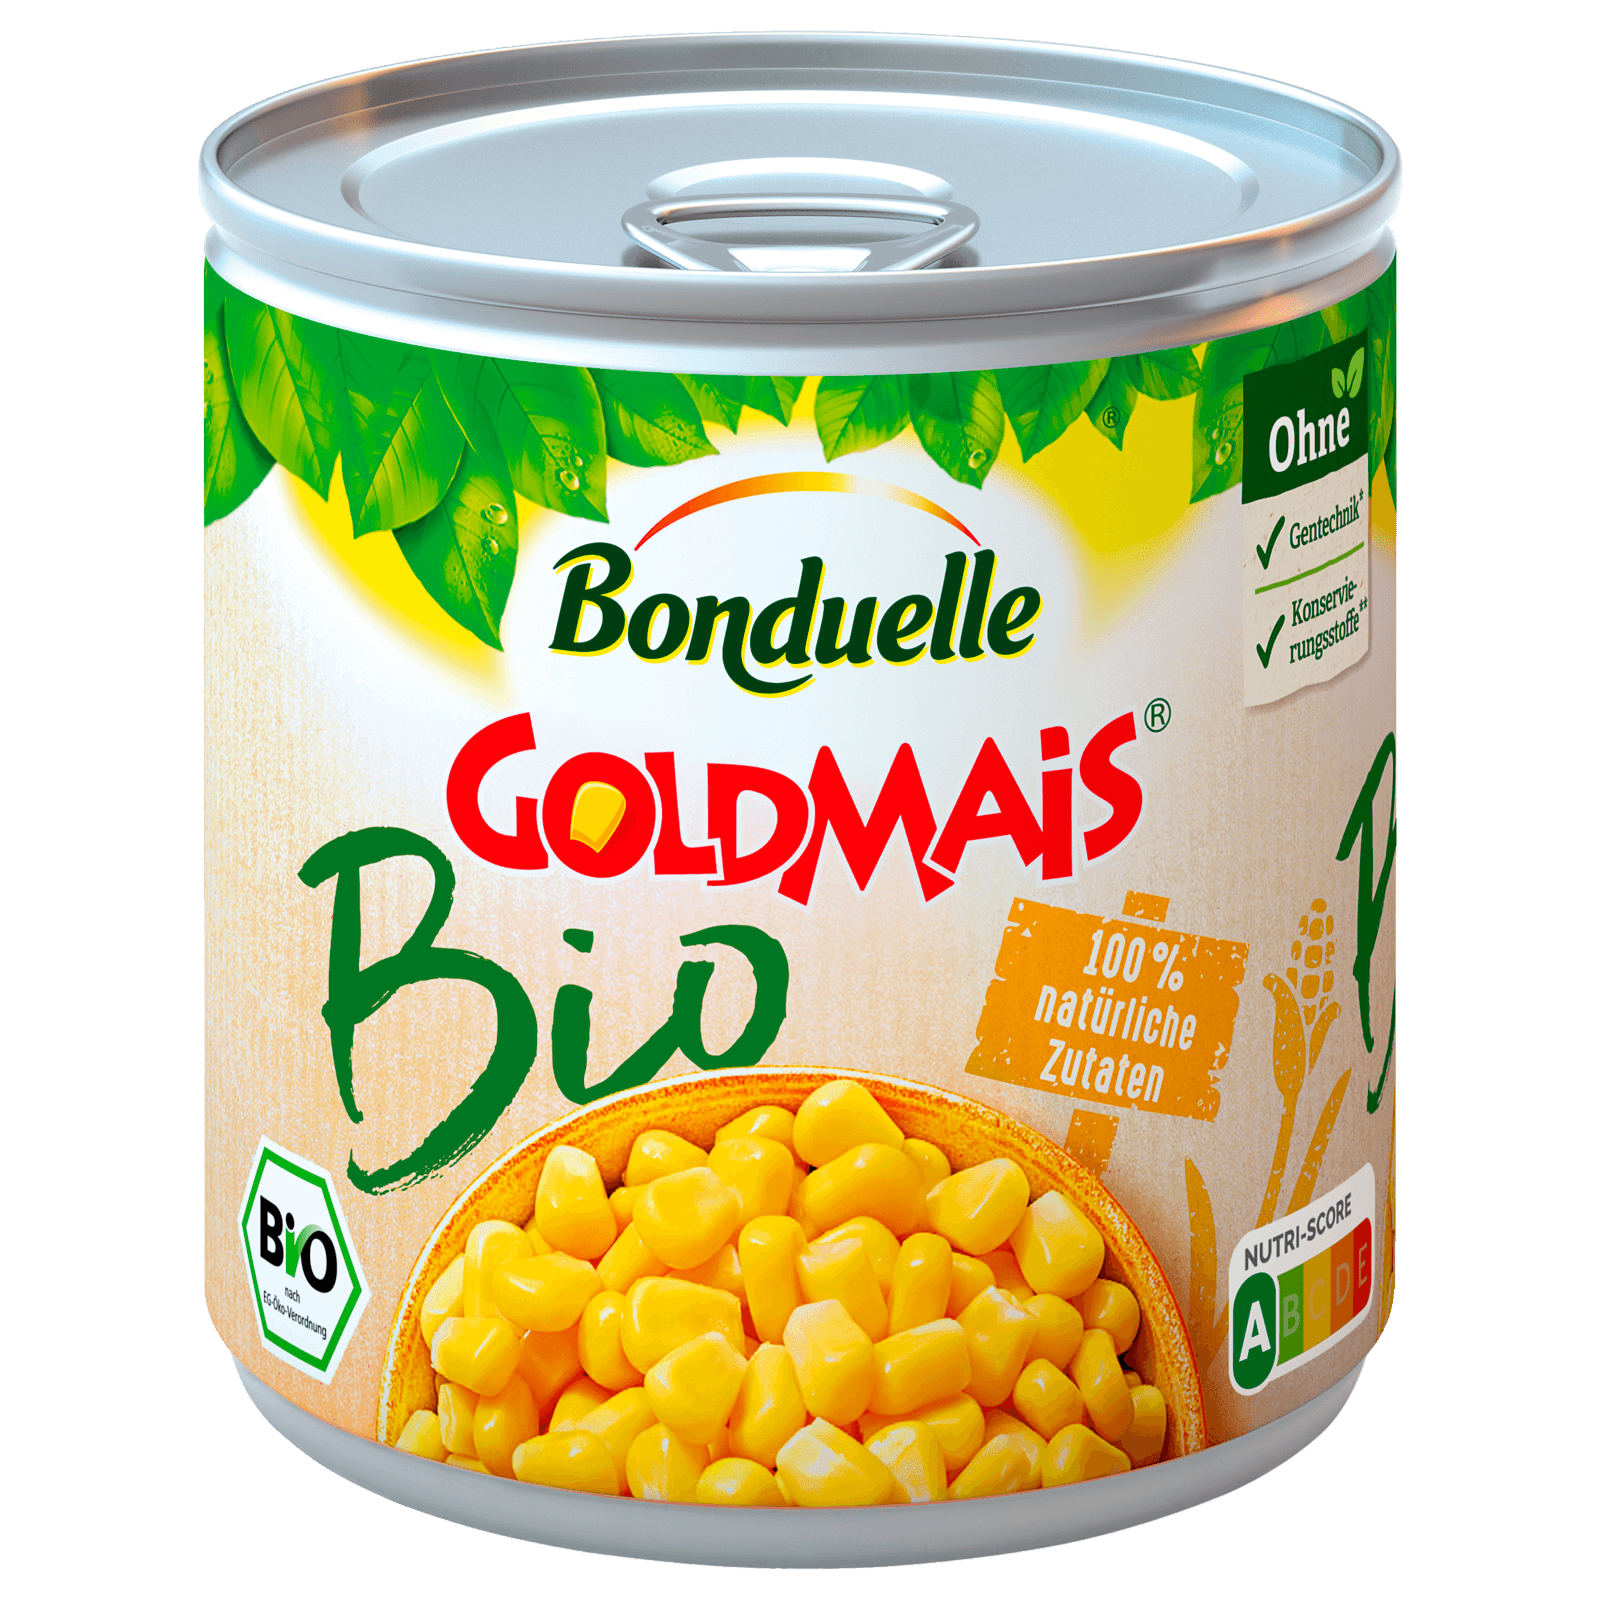 Bonduelle Bio Goldmais 285g